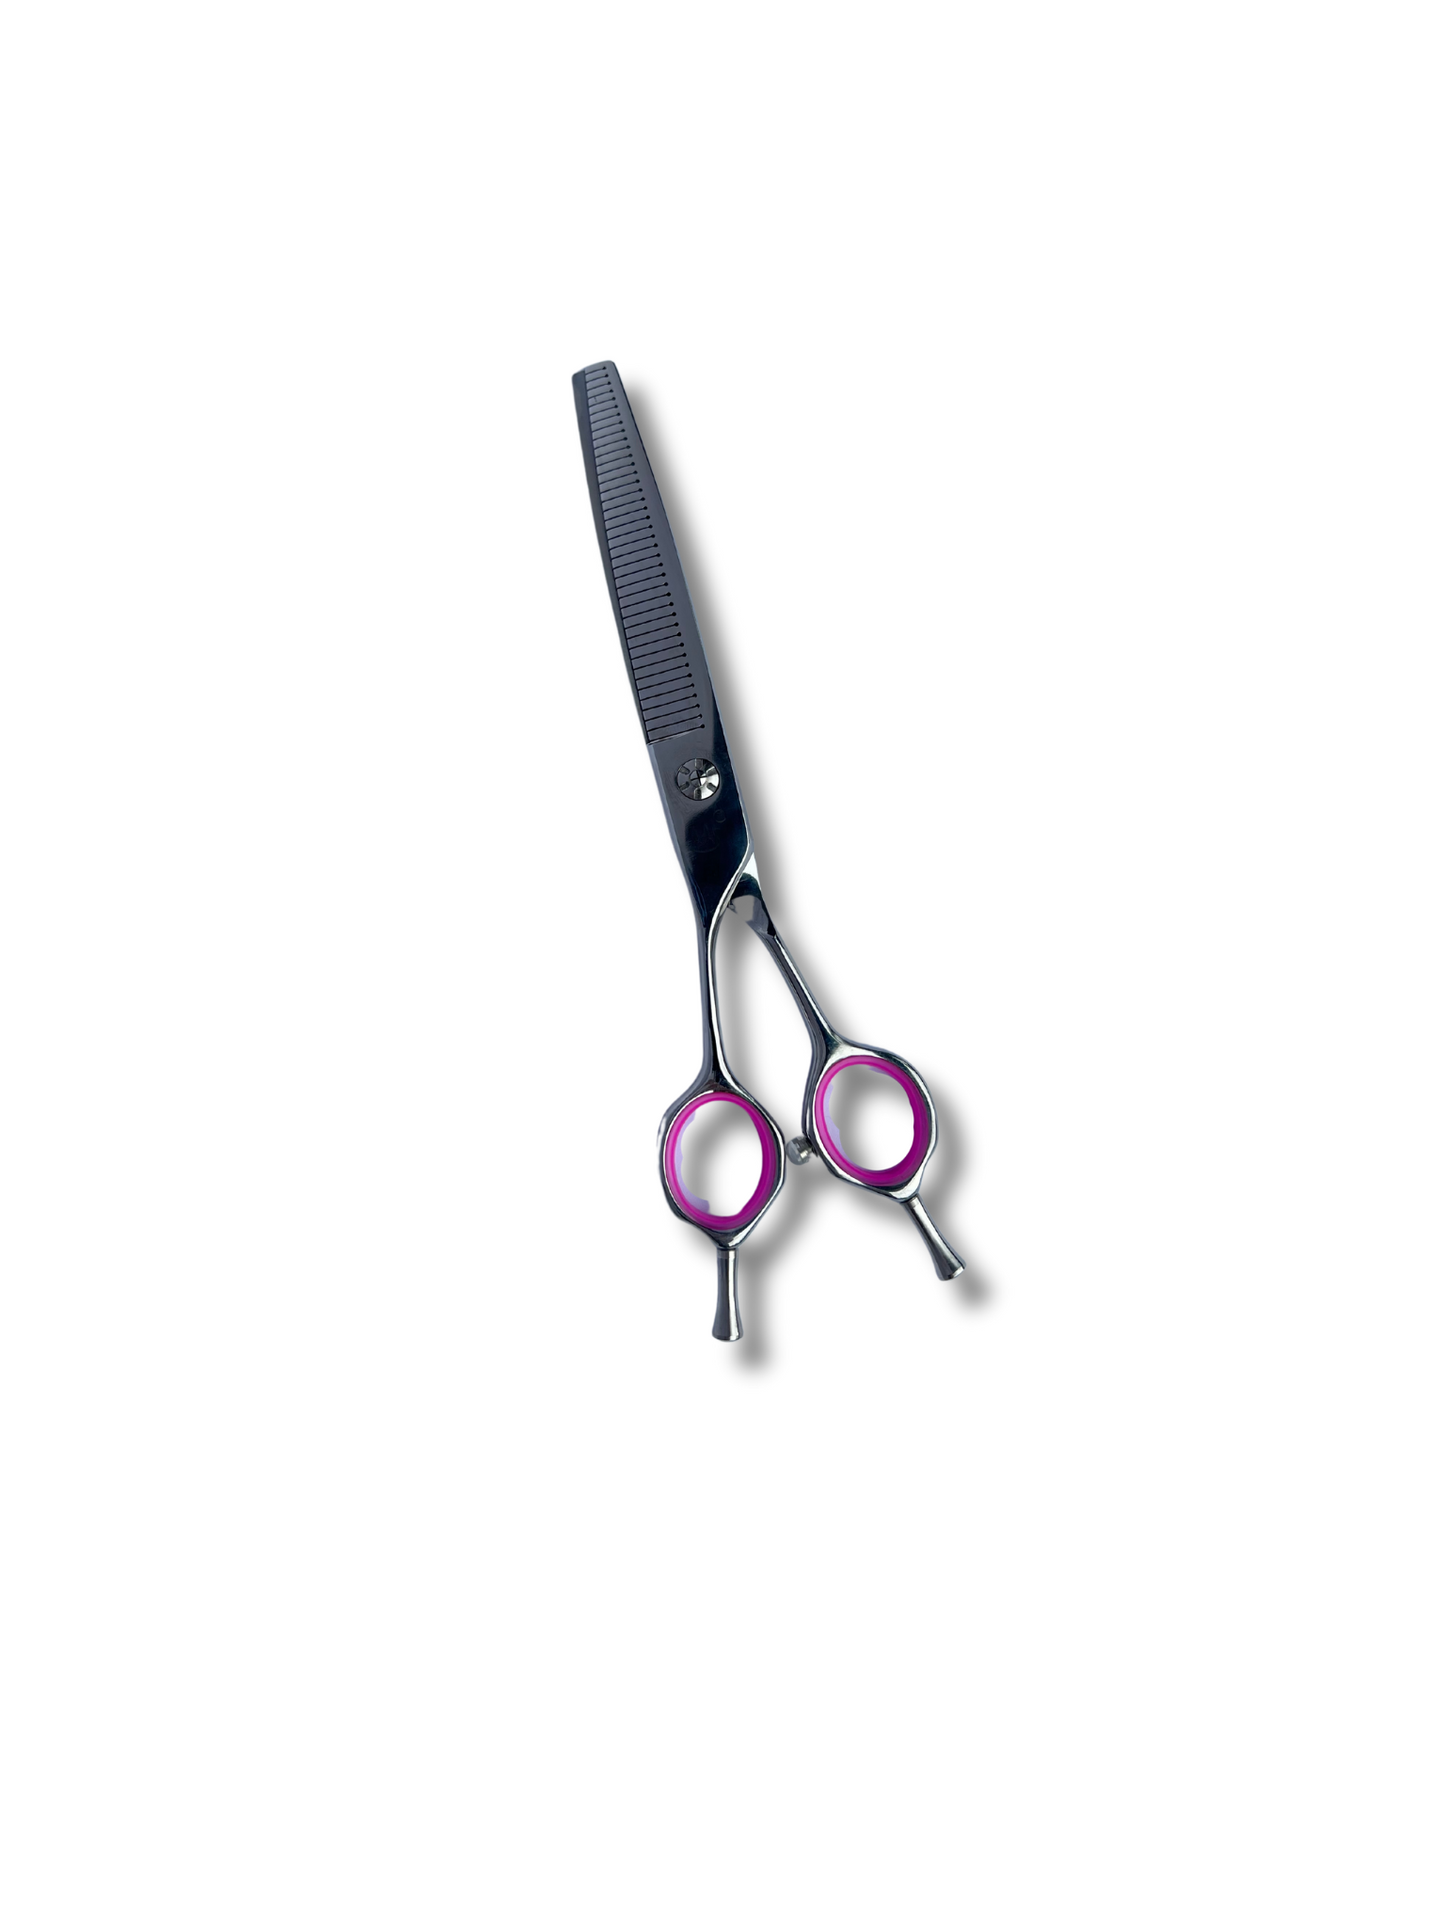 QRBF-7040 professional curved thinning scissor 7.0" 40 teeth (RH & LH)